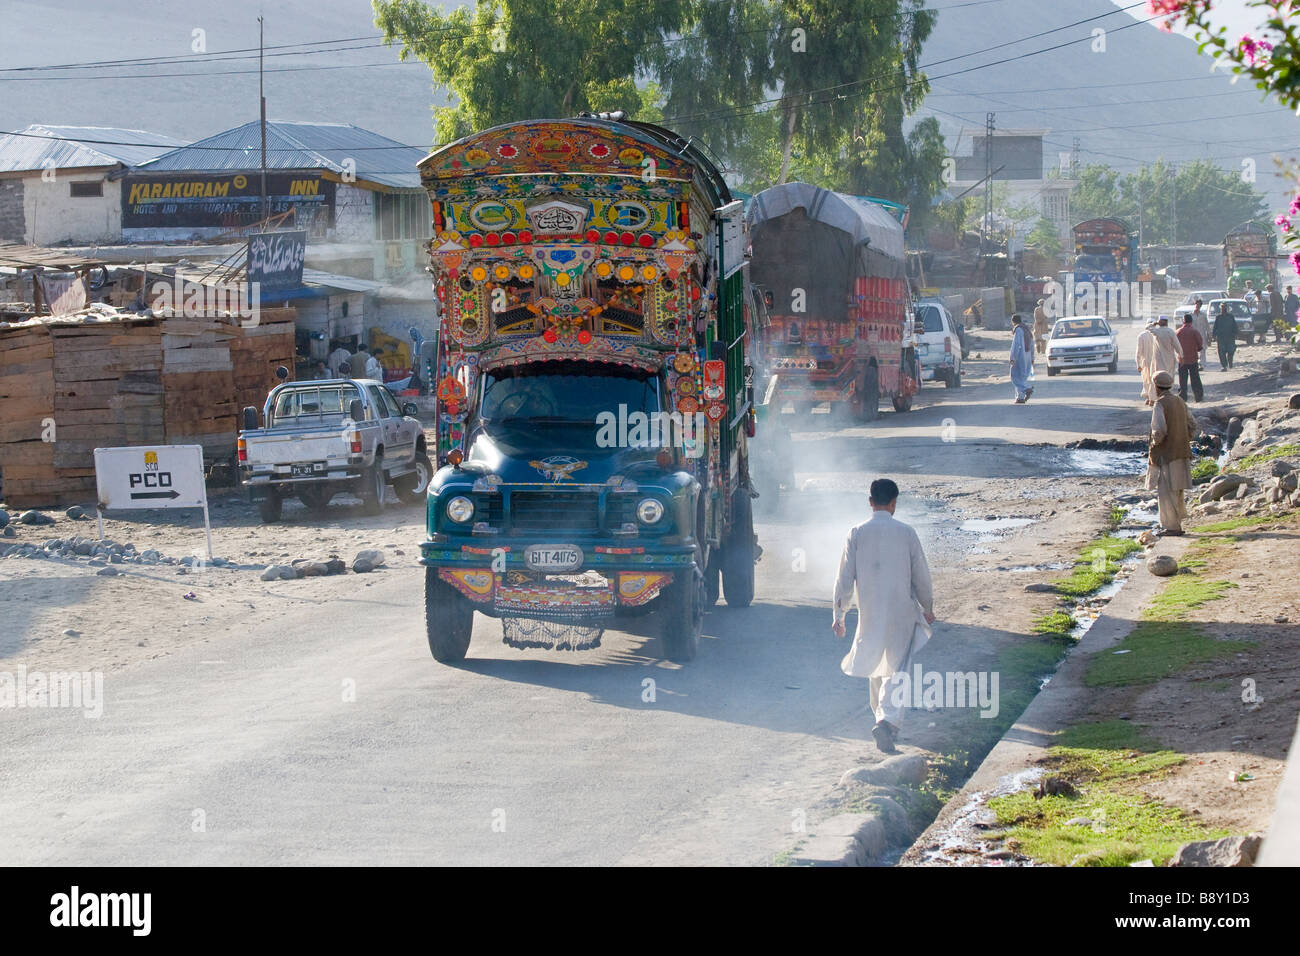 Ornate trucks cars and pedestrians on the main street of a town, Karakoram Highway, Pakistan Stock Photo